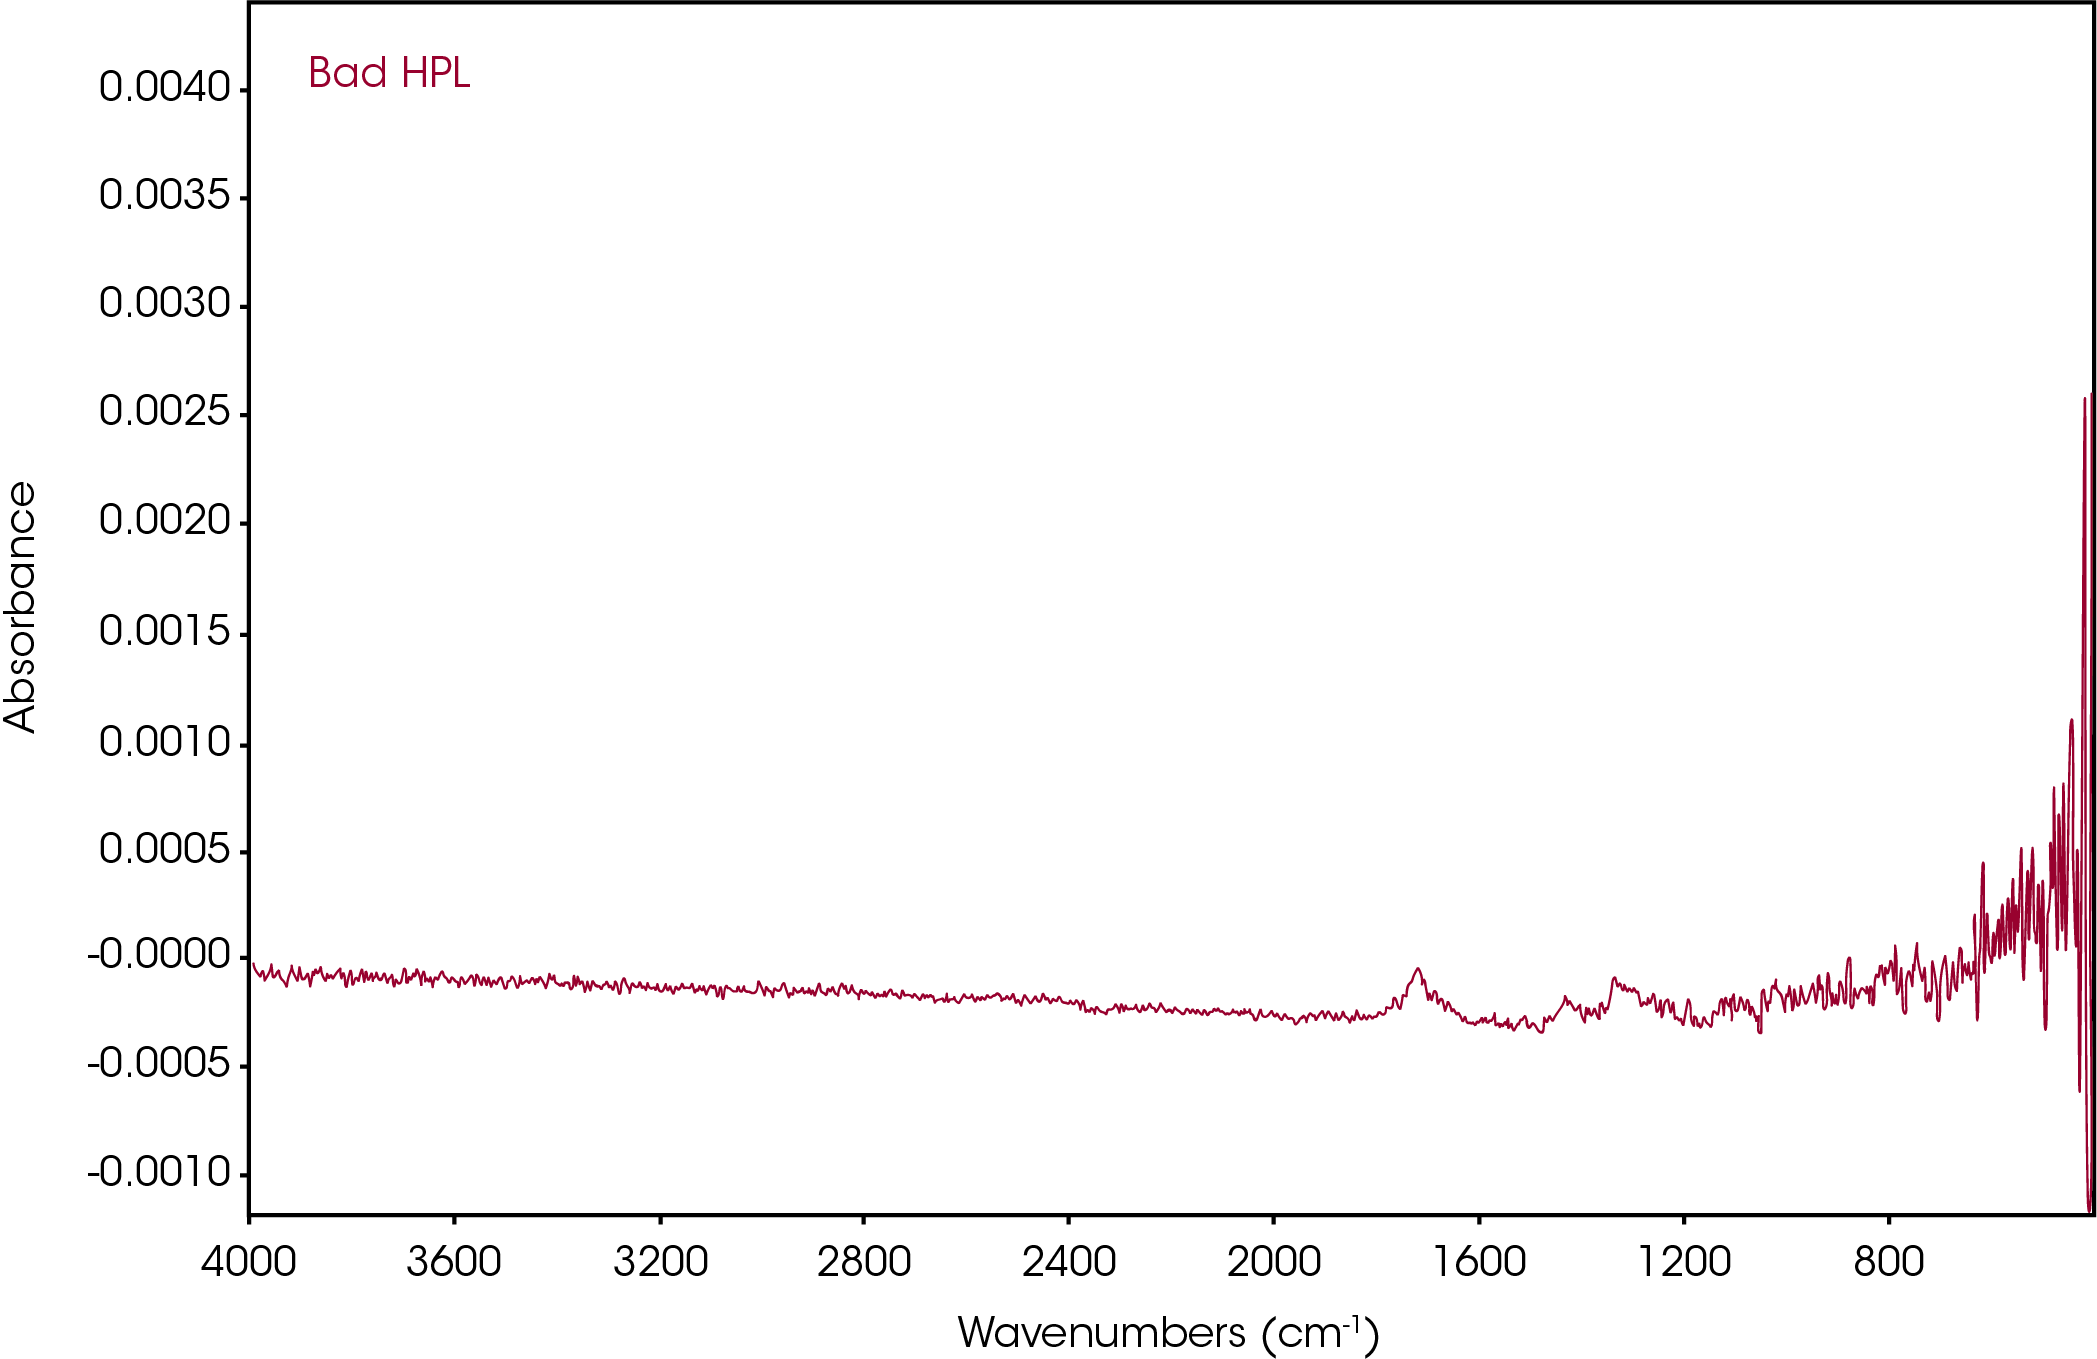 Figure 5. 100% line showing contamination